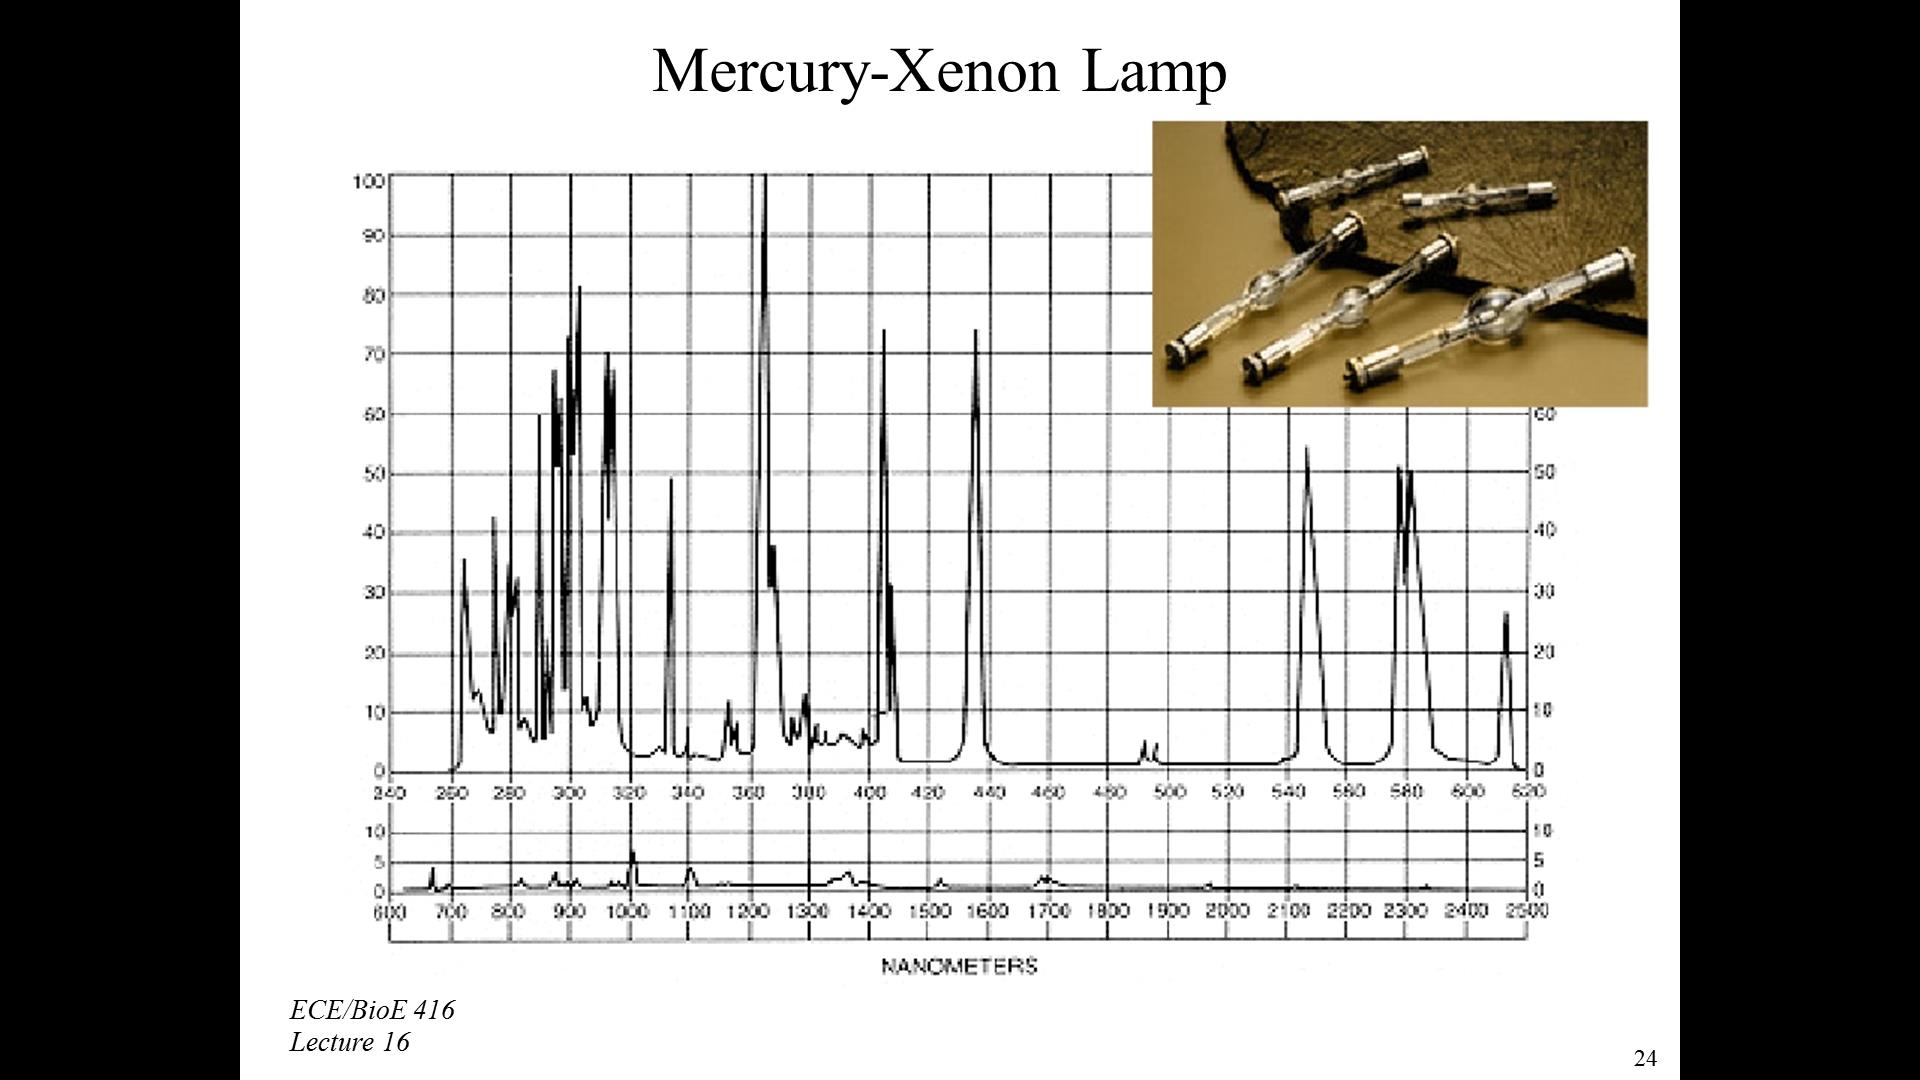 Mercury-Xenon Lamp